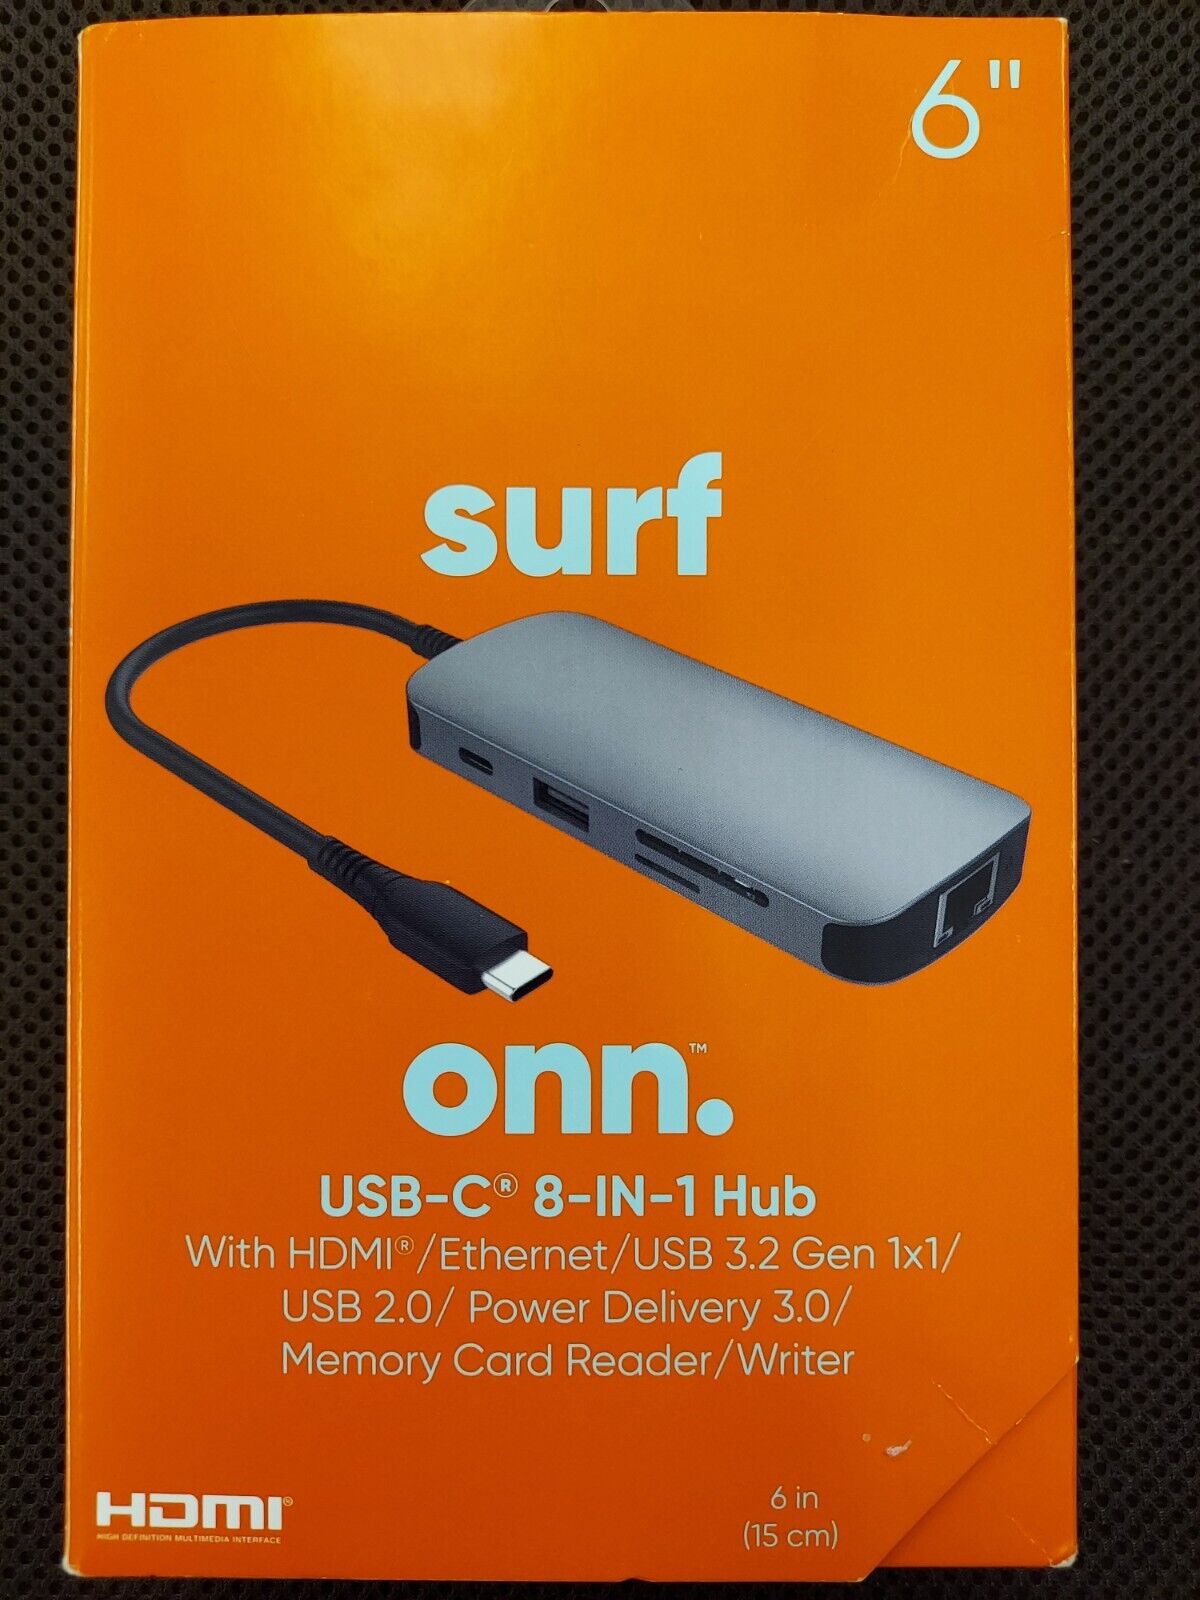 Surf Onn 6”  USB-C  8-IN-1 Hub Memory Card Reader Writer, HDMI, USB 2.0 and 3.0.